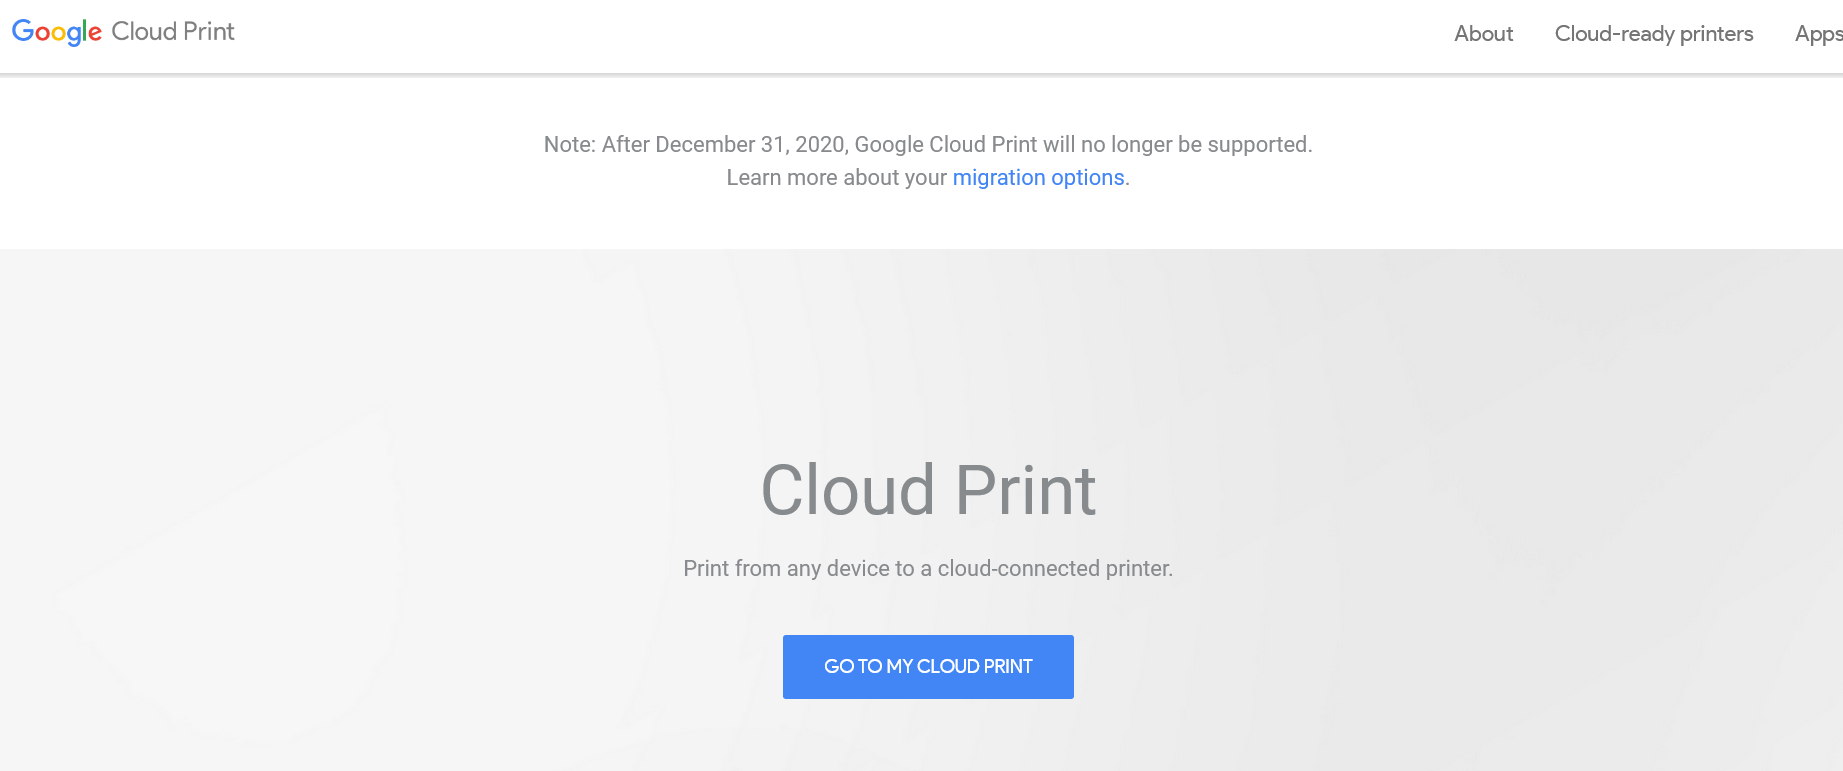 6-best-google-cloud-print-alternatives-2021-techniblogic